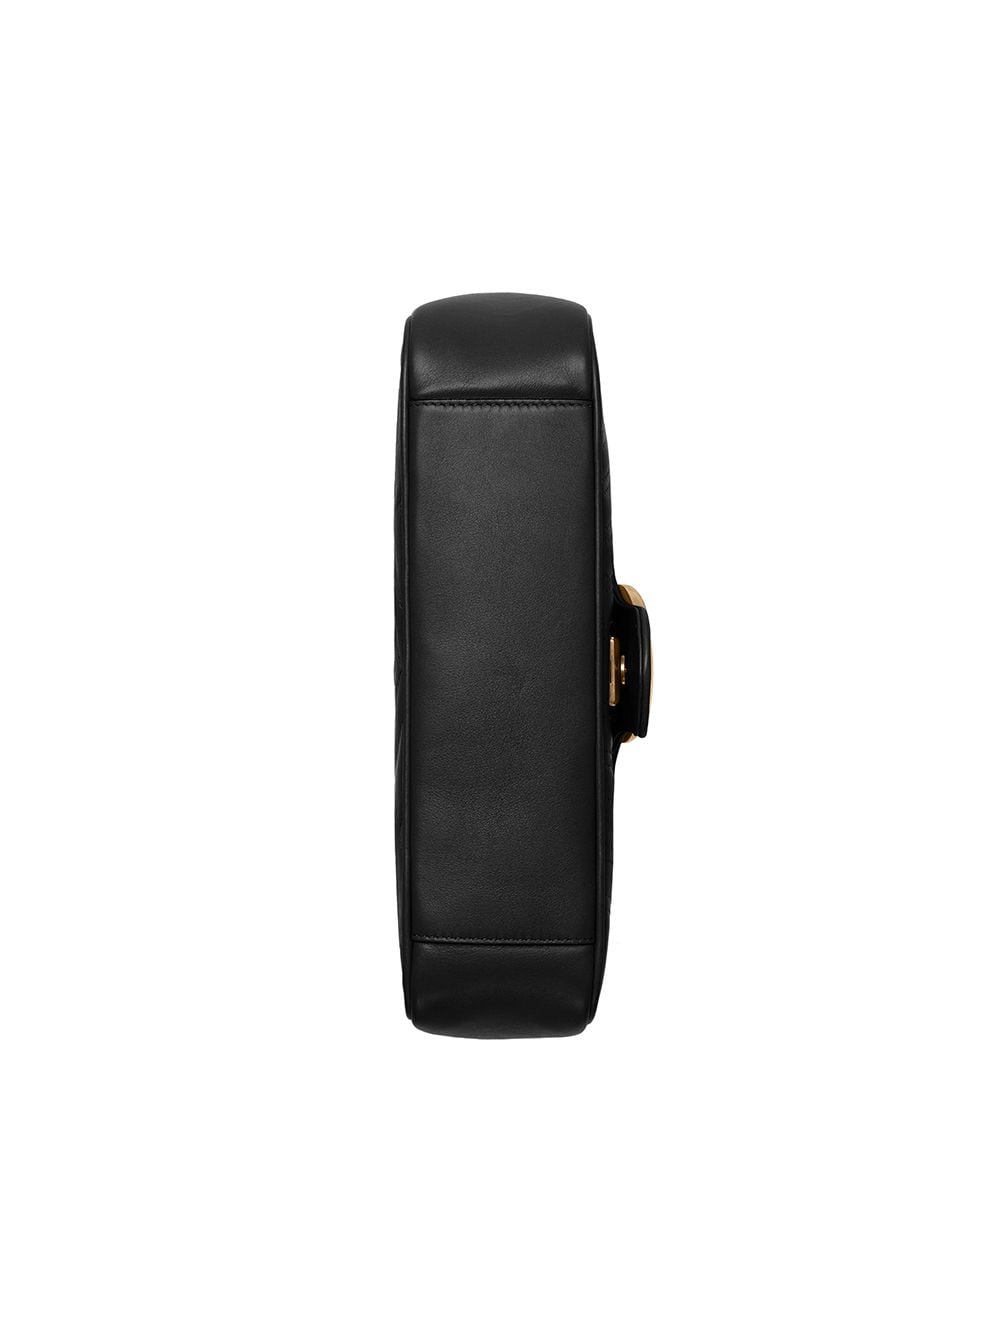 GUCCI Calfskin Matelasse Small GG Marmont Chain Shoulder Bag Black 1313010